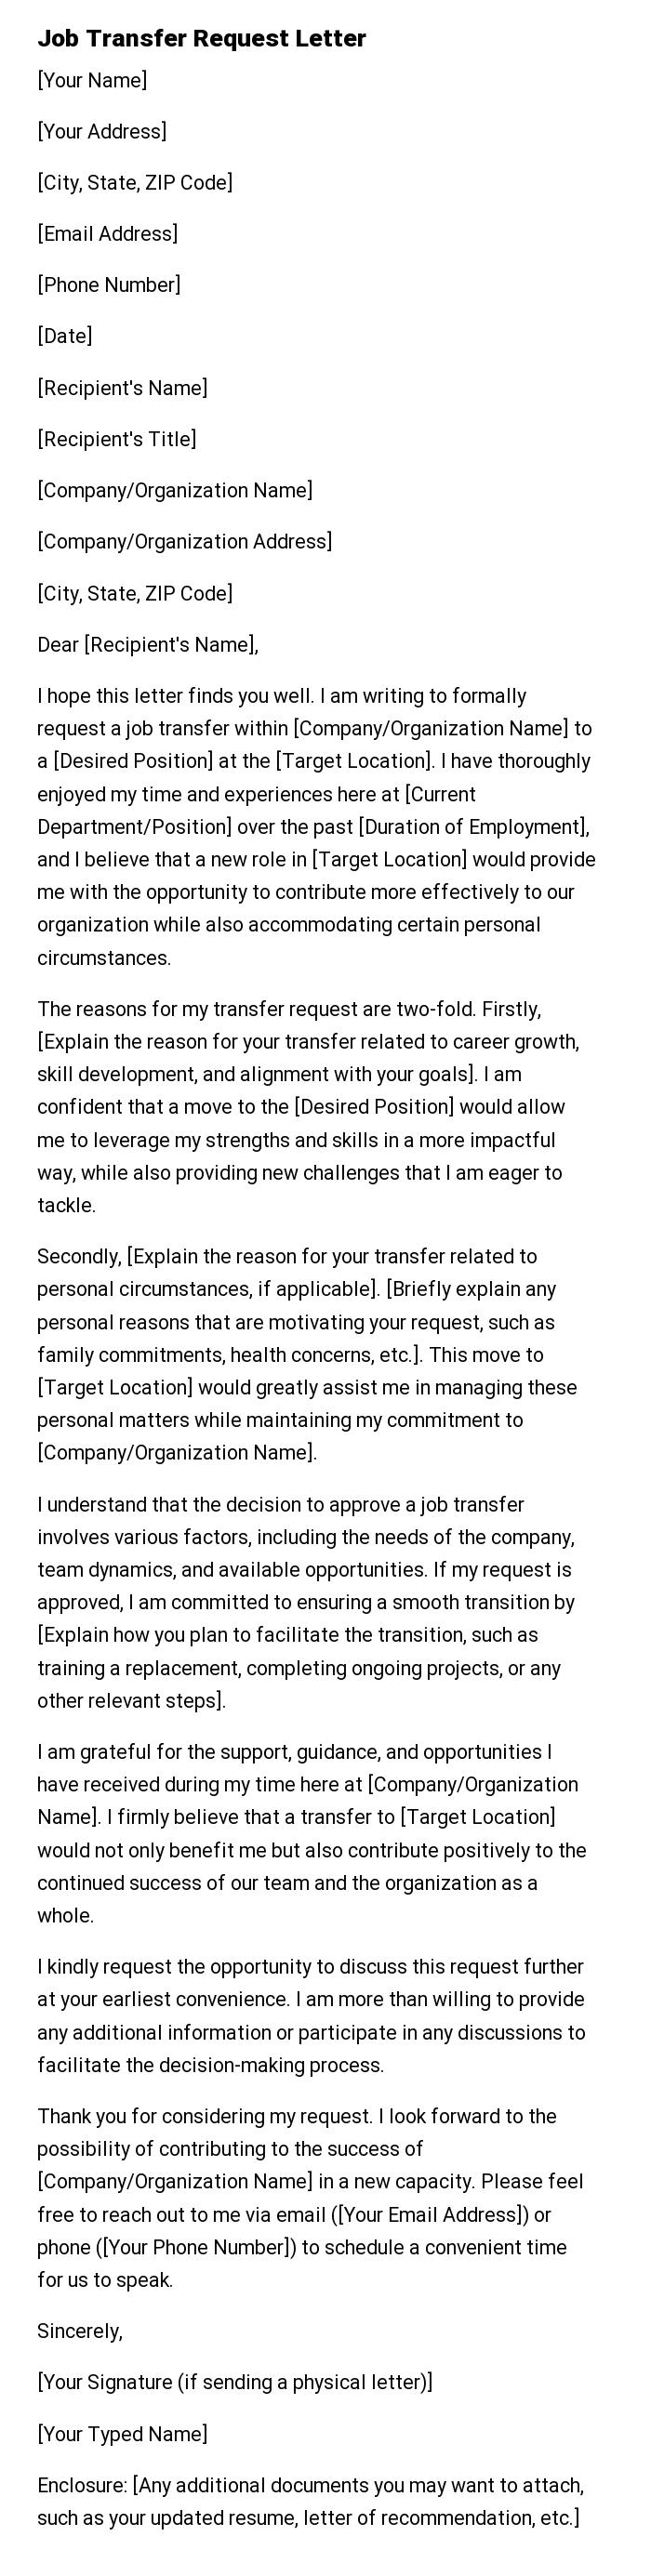 Job Transfer Request Letter